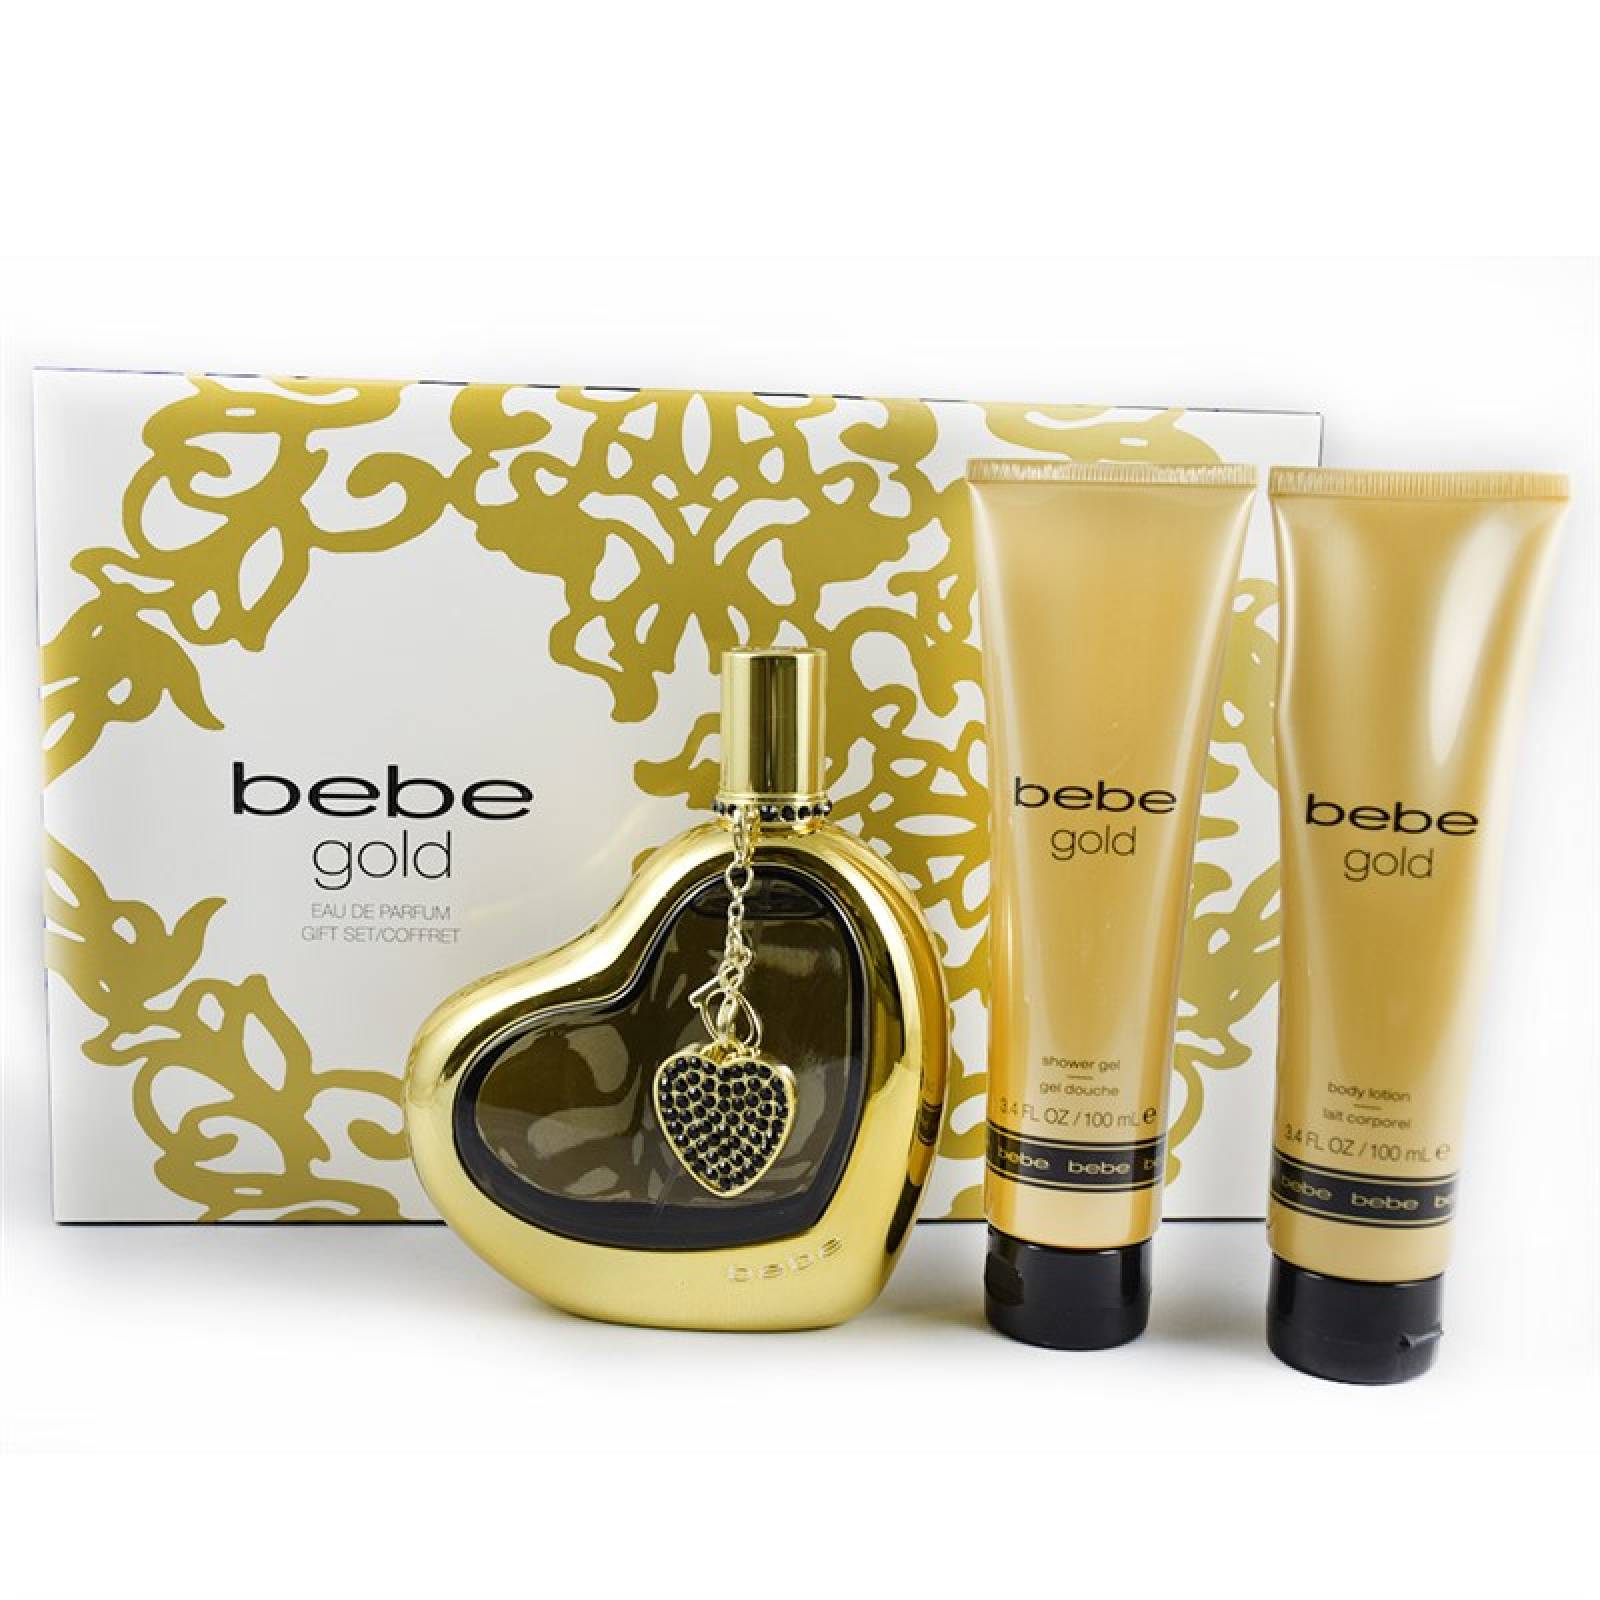 Set Bebe Gold 3 Pzs 100 Ml Edp Spray + Body Lotion 100 ml + Shower Gel 100 ml de Bebe Fragancia para Dama